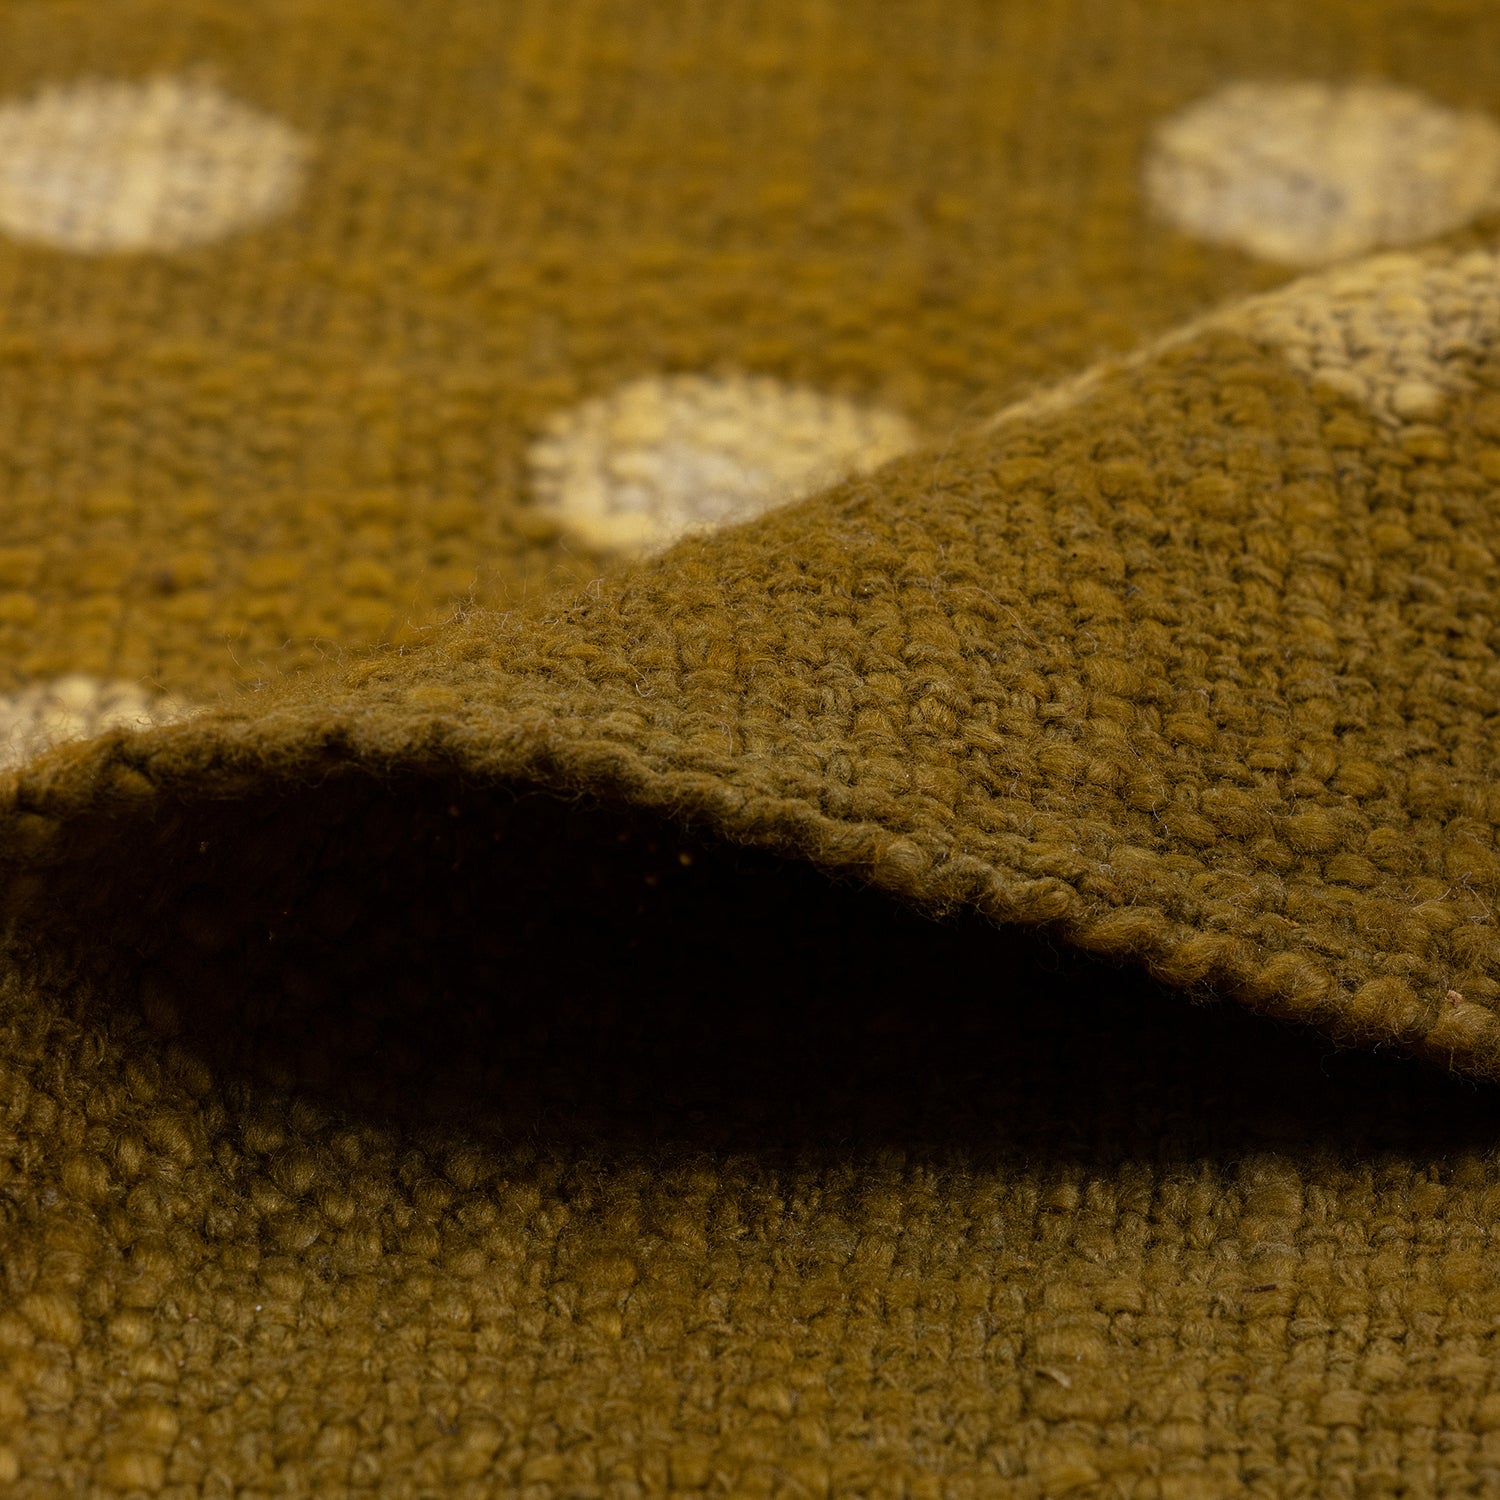 Brown Polka Dots Decorative Cotton Blanket Online